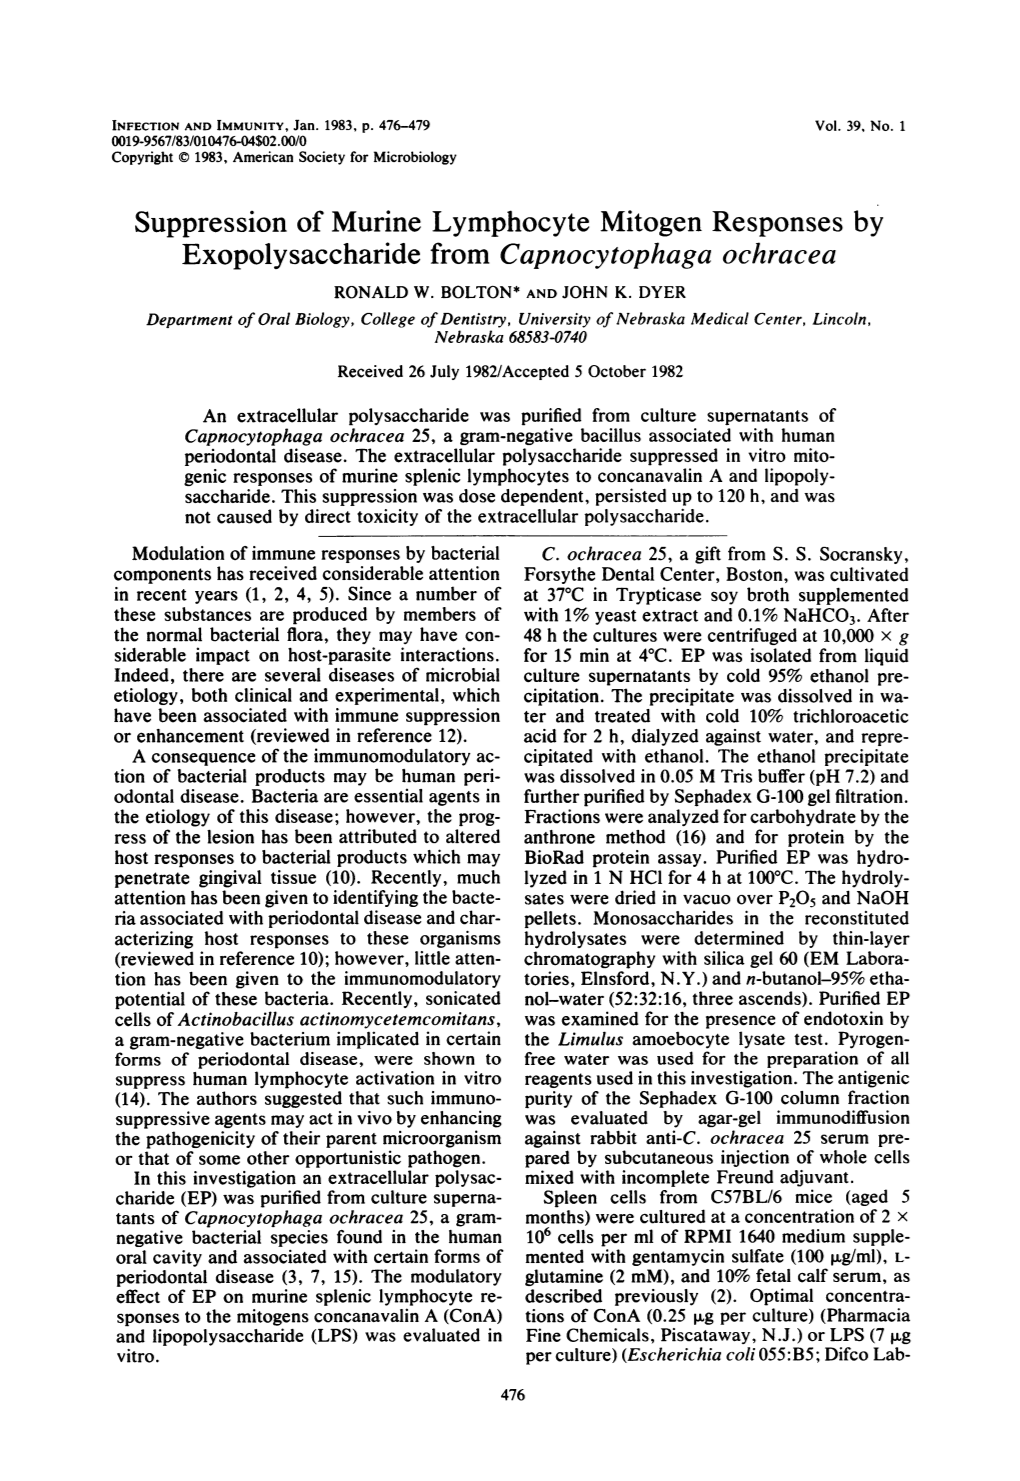 Suppression of Murine Lymphocyte Mitogen Responses by Exopolysaccharide from Capnocytophaga Ochracea RONALD W